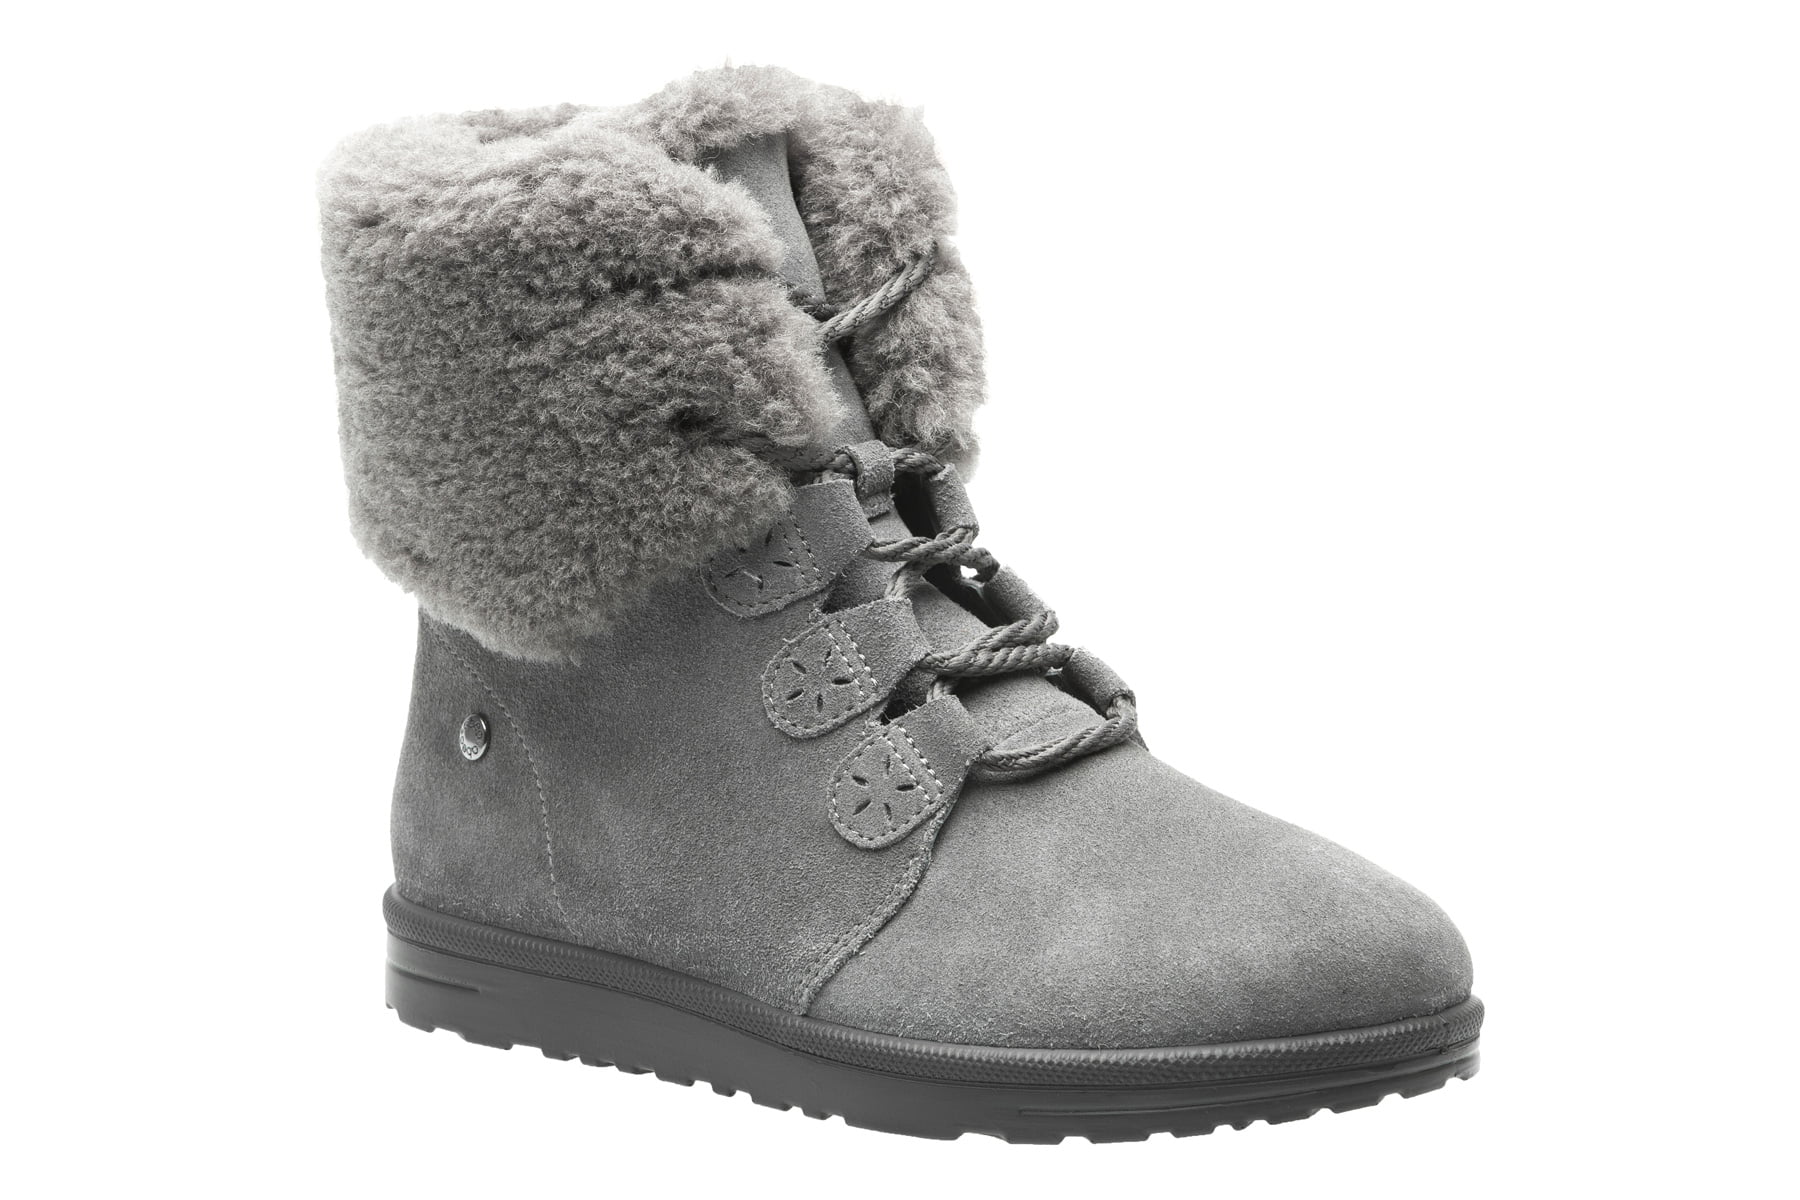 ABEO Imelda - Shearling Boots in Grey - Walmart.com